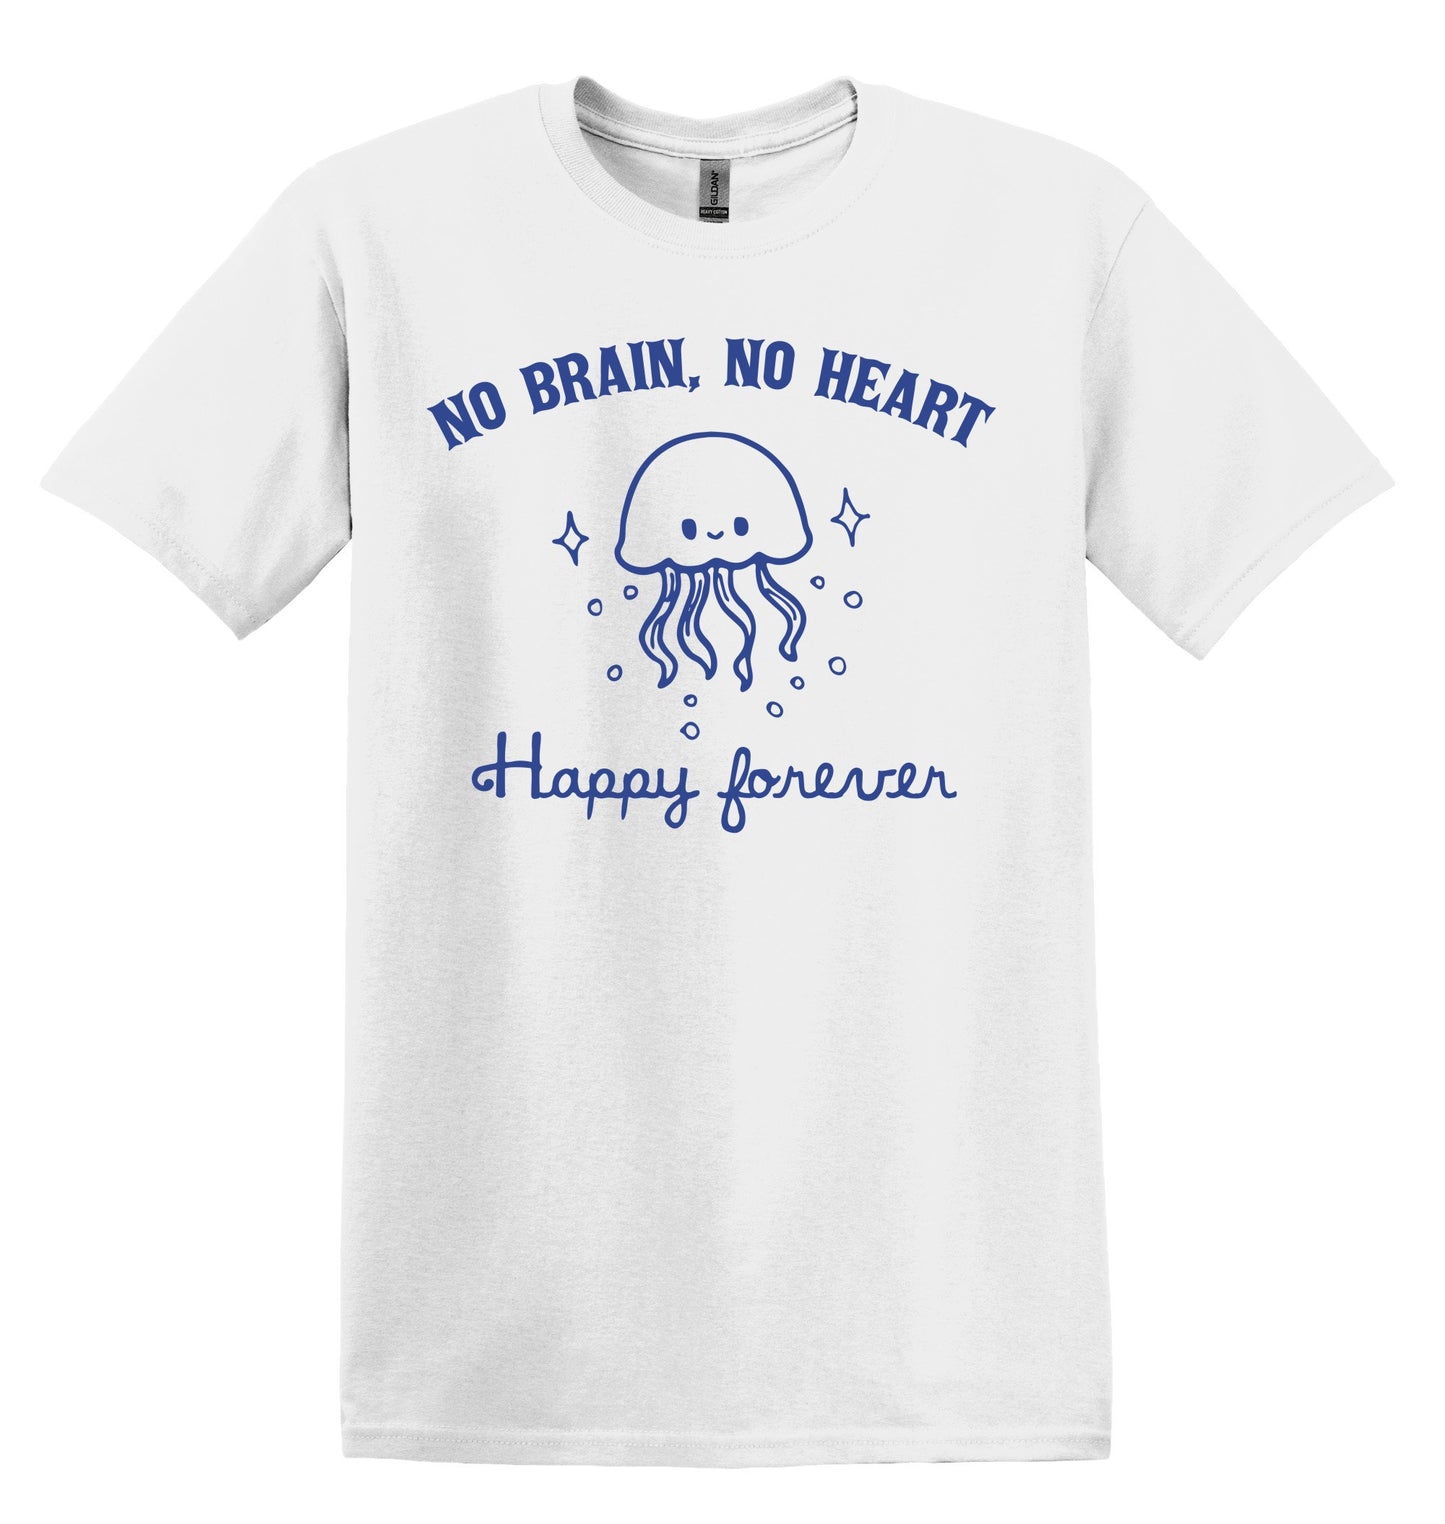 No Brain No Heart Happy Forever Shirt Graphic Shirt Funny Shirt Vintage Funny TShirt Nostalgia T-Shirt Relaxed Cotton Shirt Minimalist Shirt